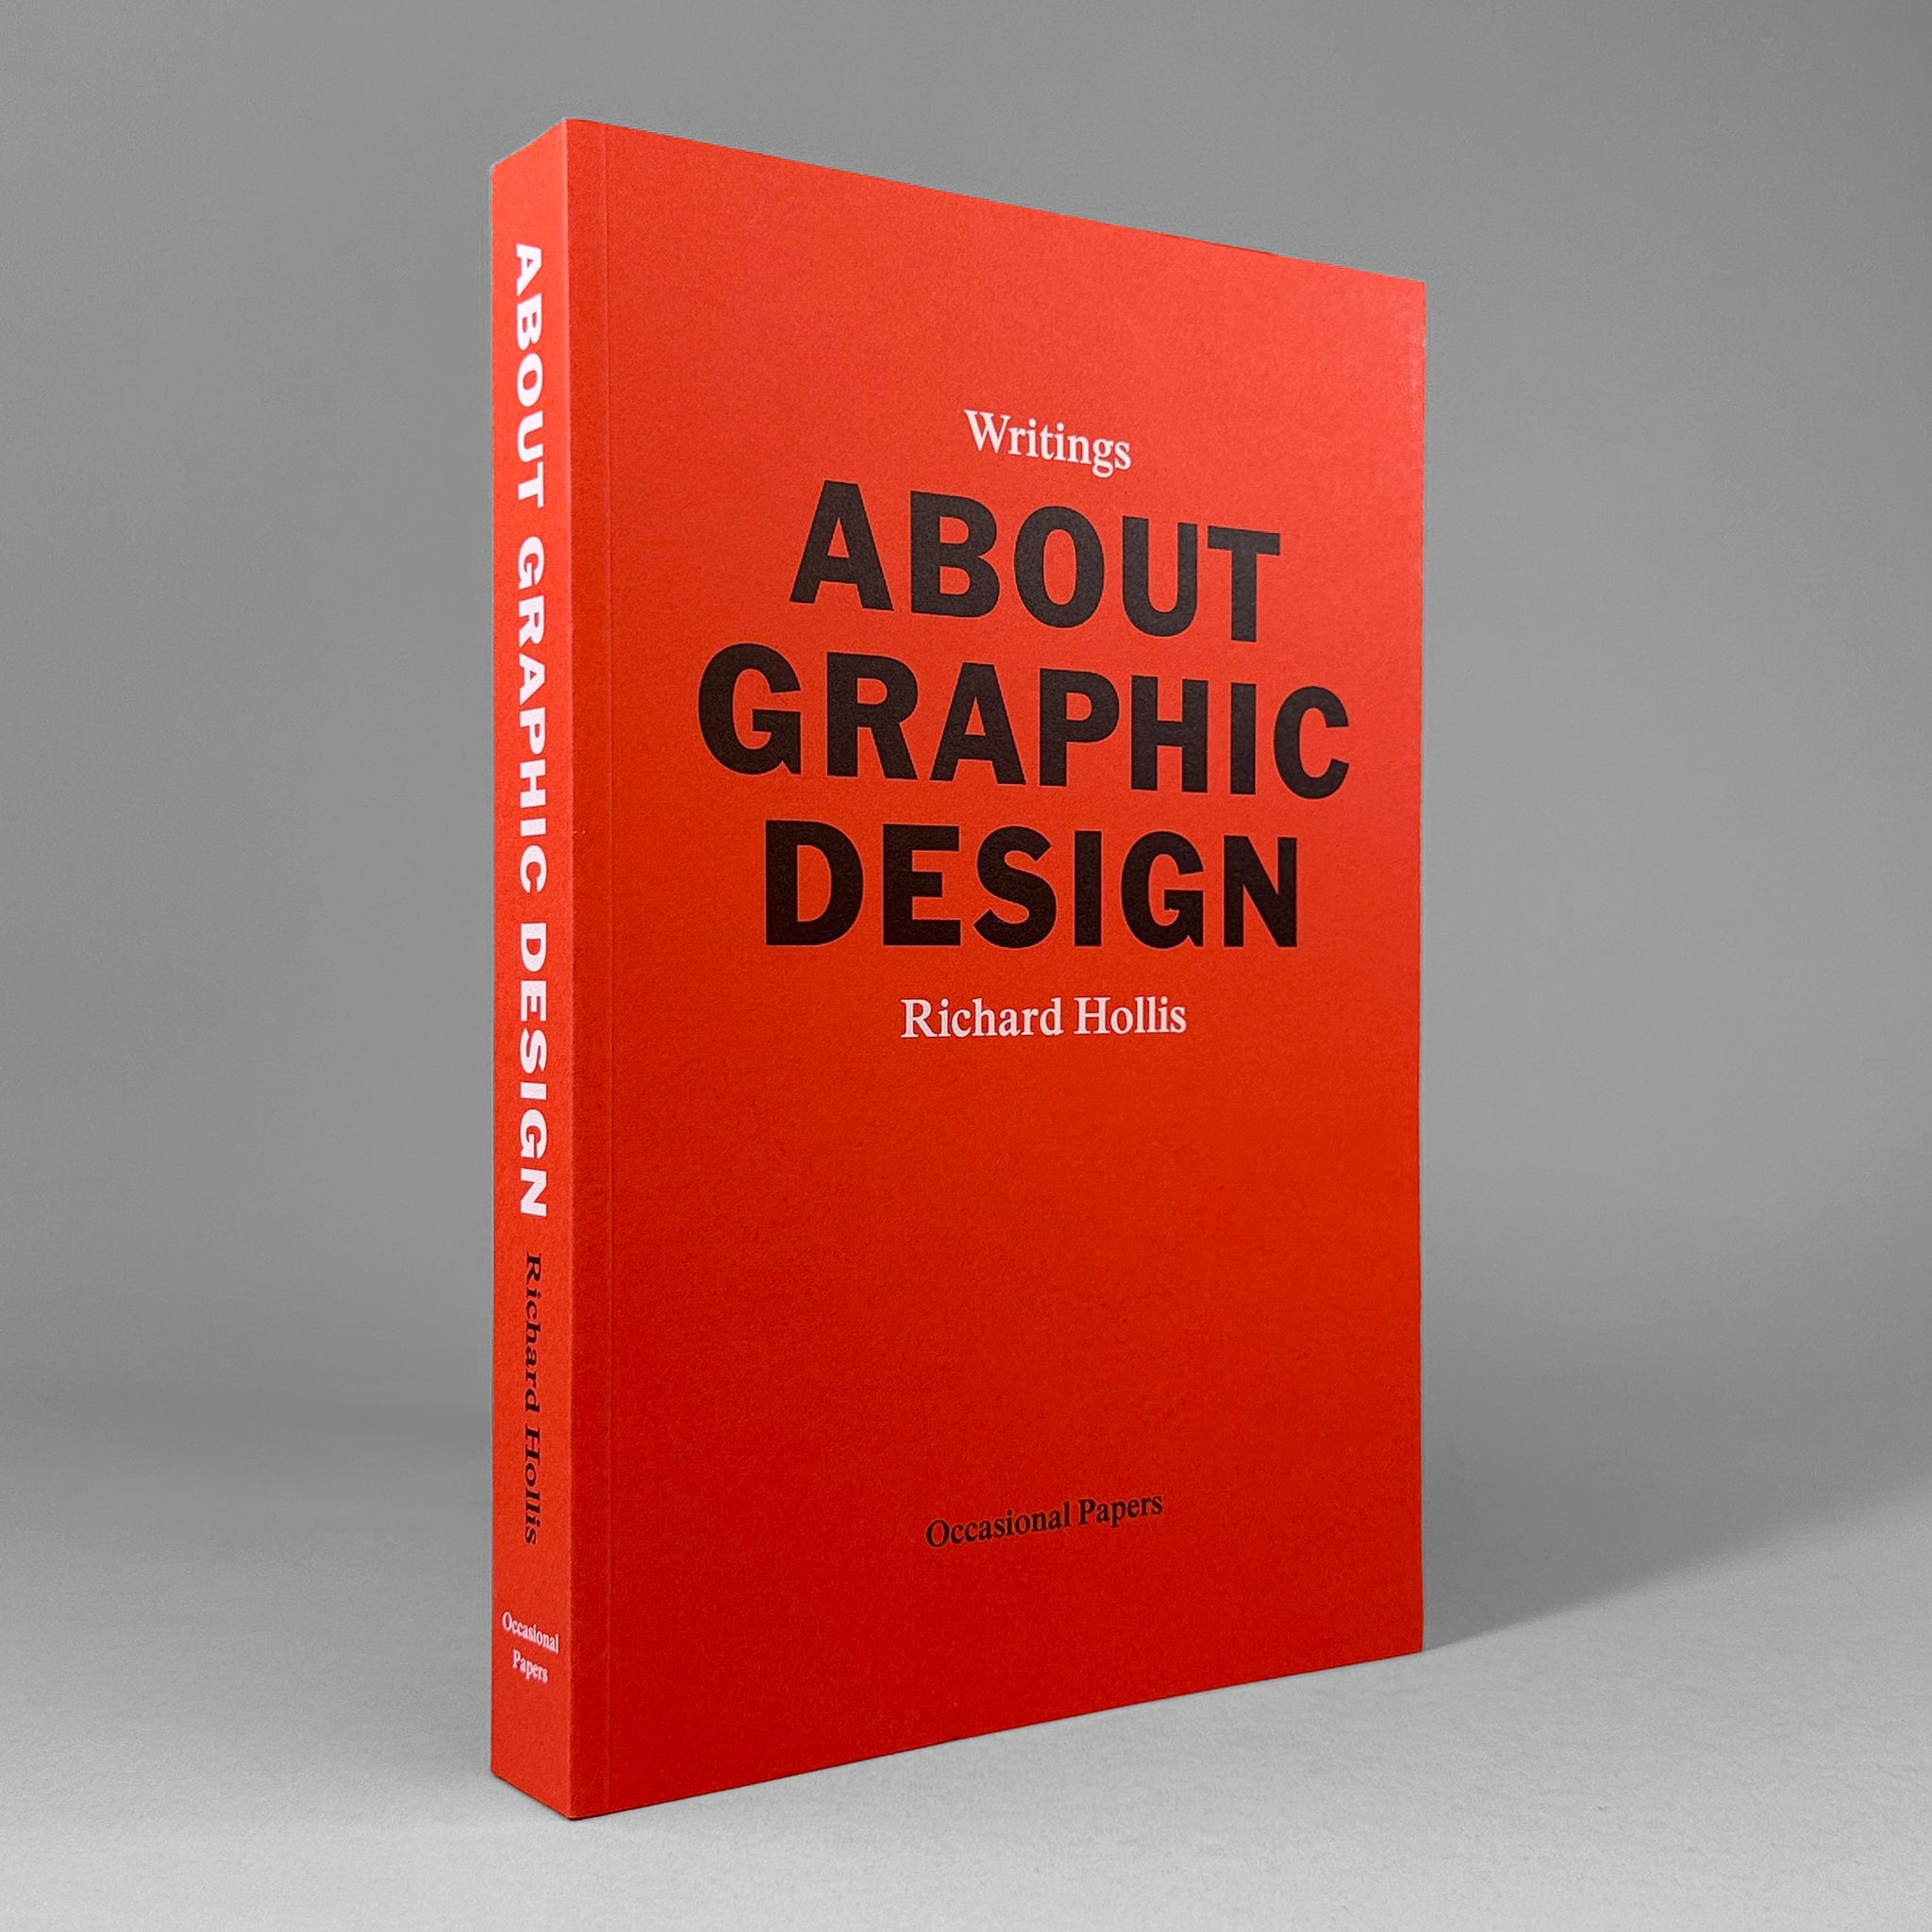 Writings About Graphic Design / Richard Hollis